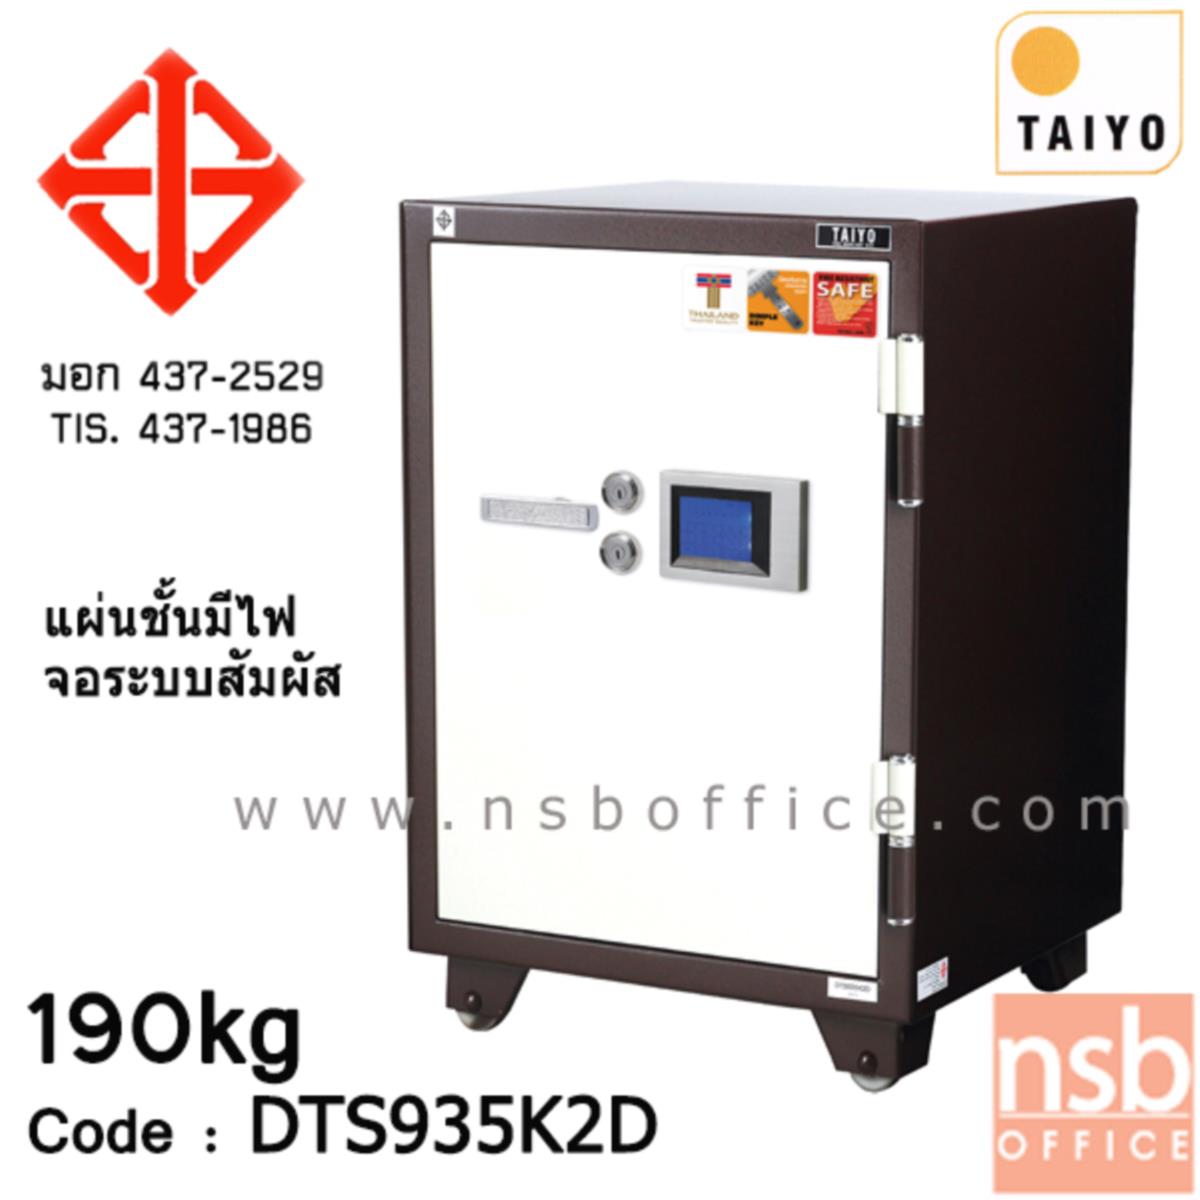 F01A060:ตู้เซฟ Taiyo ระบบดิจิตอล จอสัมผัส รุ่น 190 กก. 2 กุญแจ 1 รหัส (DTS 935 K2D)   